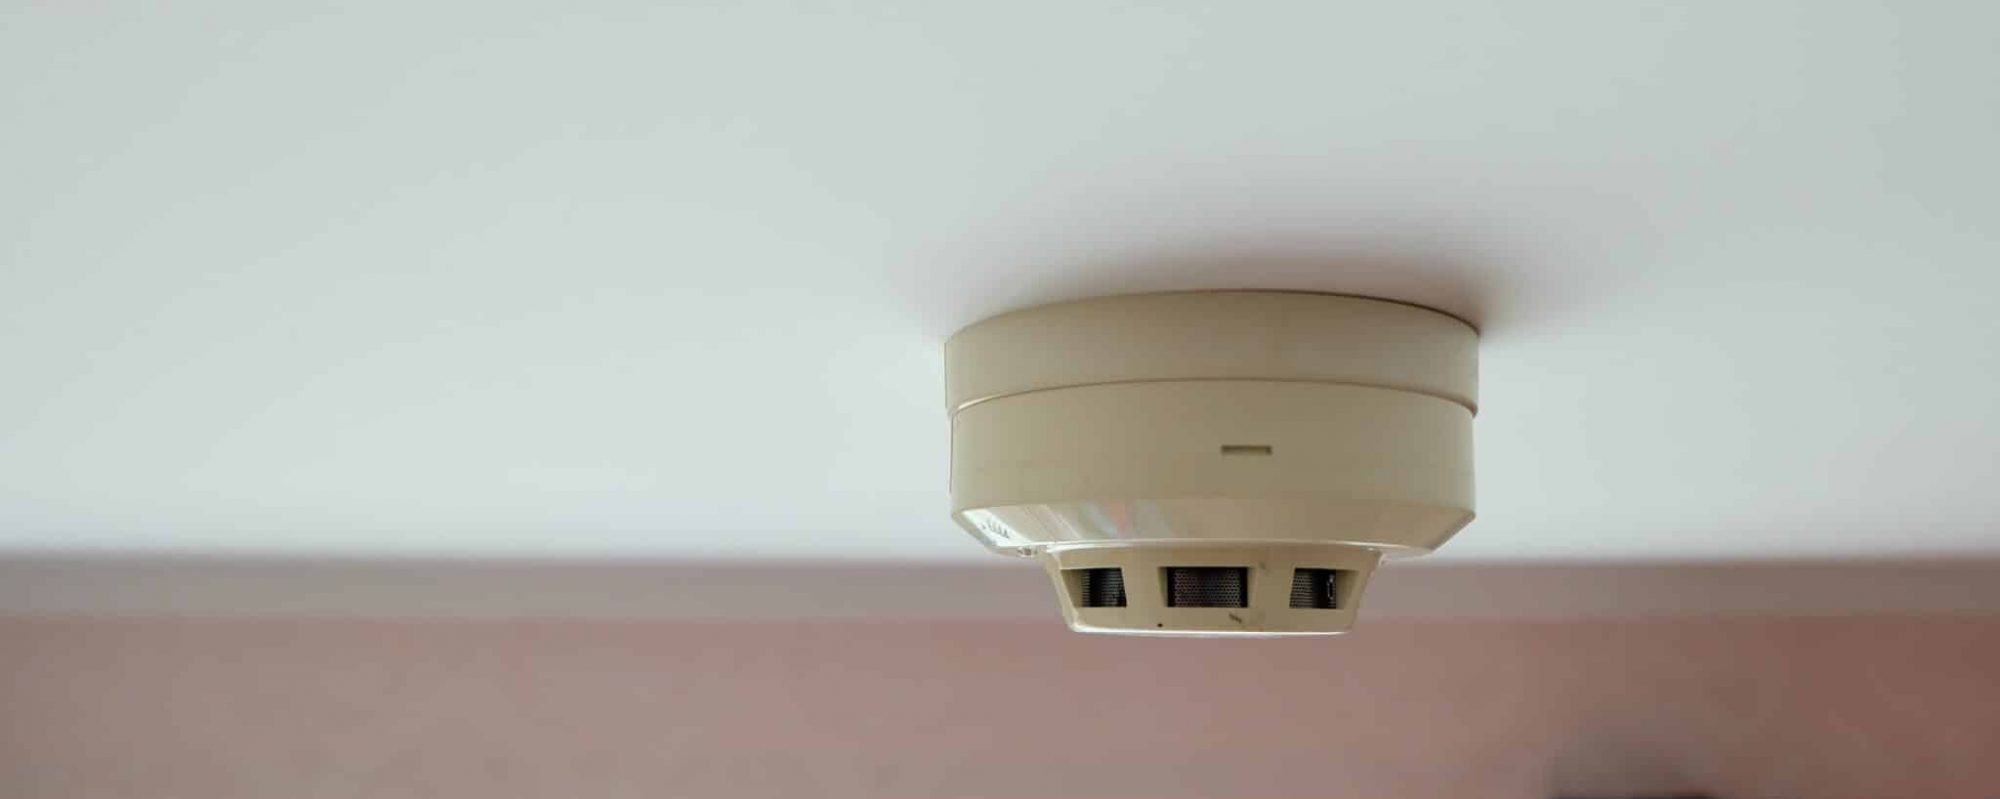 smoke-fire-detector-inside-the-condo-bedroom-sele-2021-09-02-12-26-18-utc